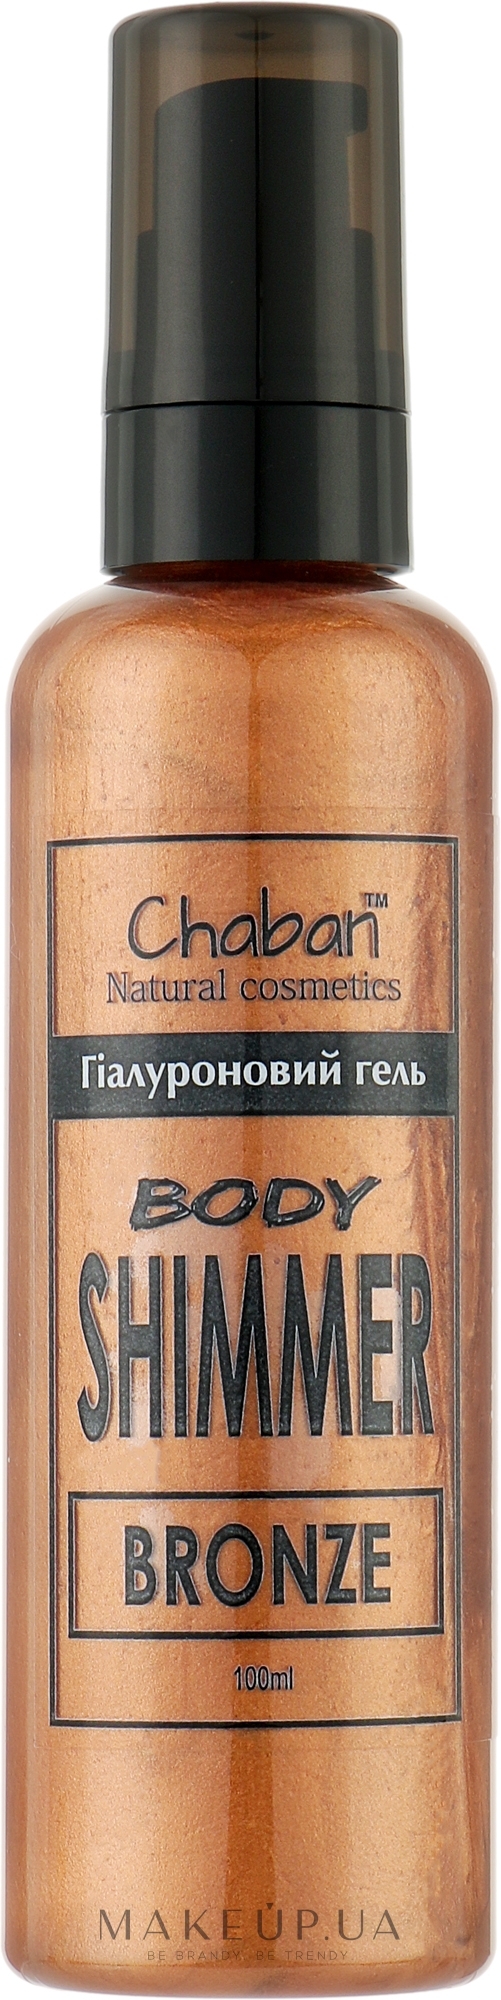 Гіалуроновий гель-шимер для тіла - Chaban Bronze Body Shimmer — фото 100ml